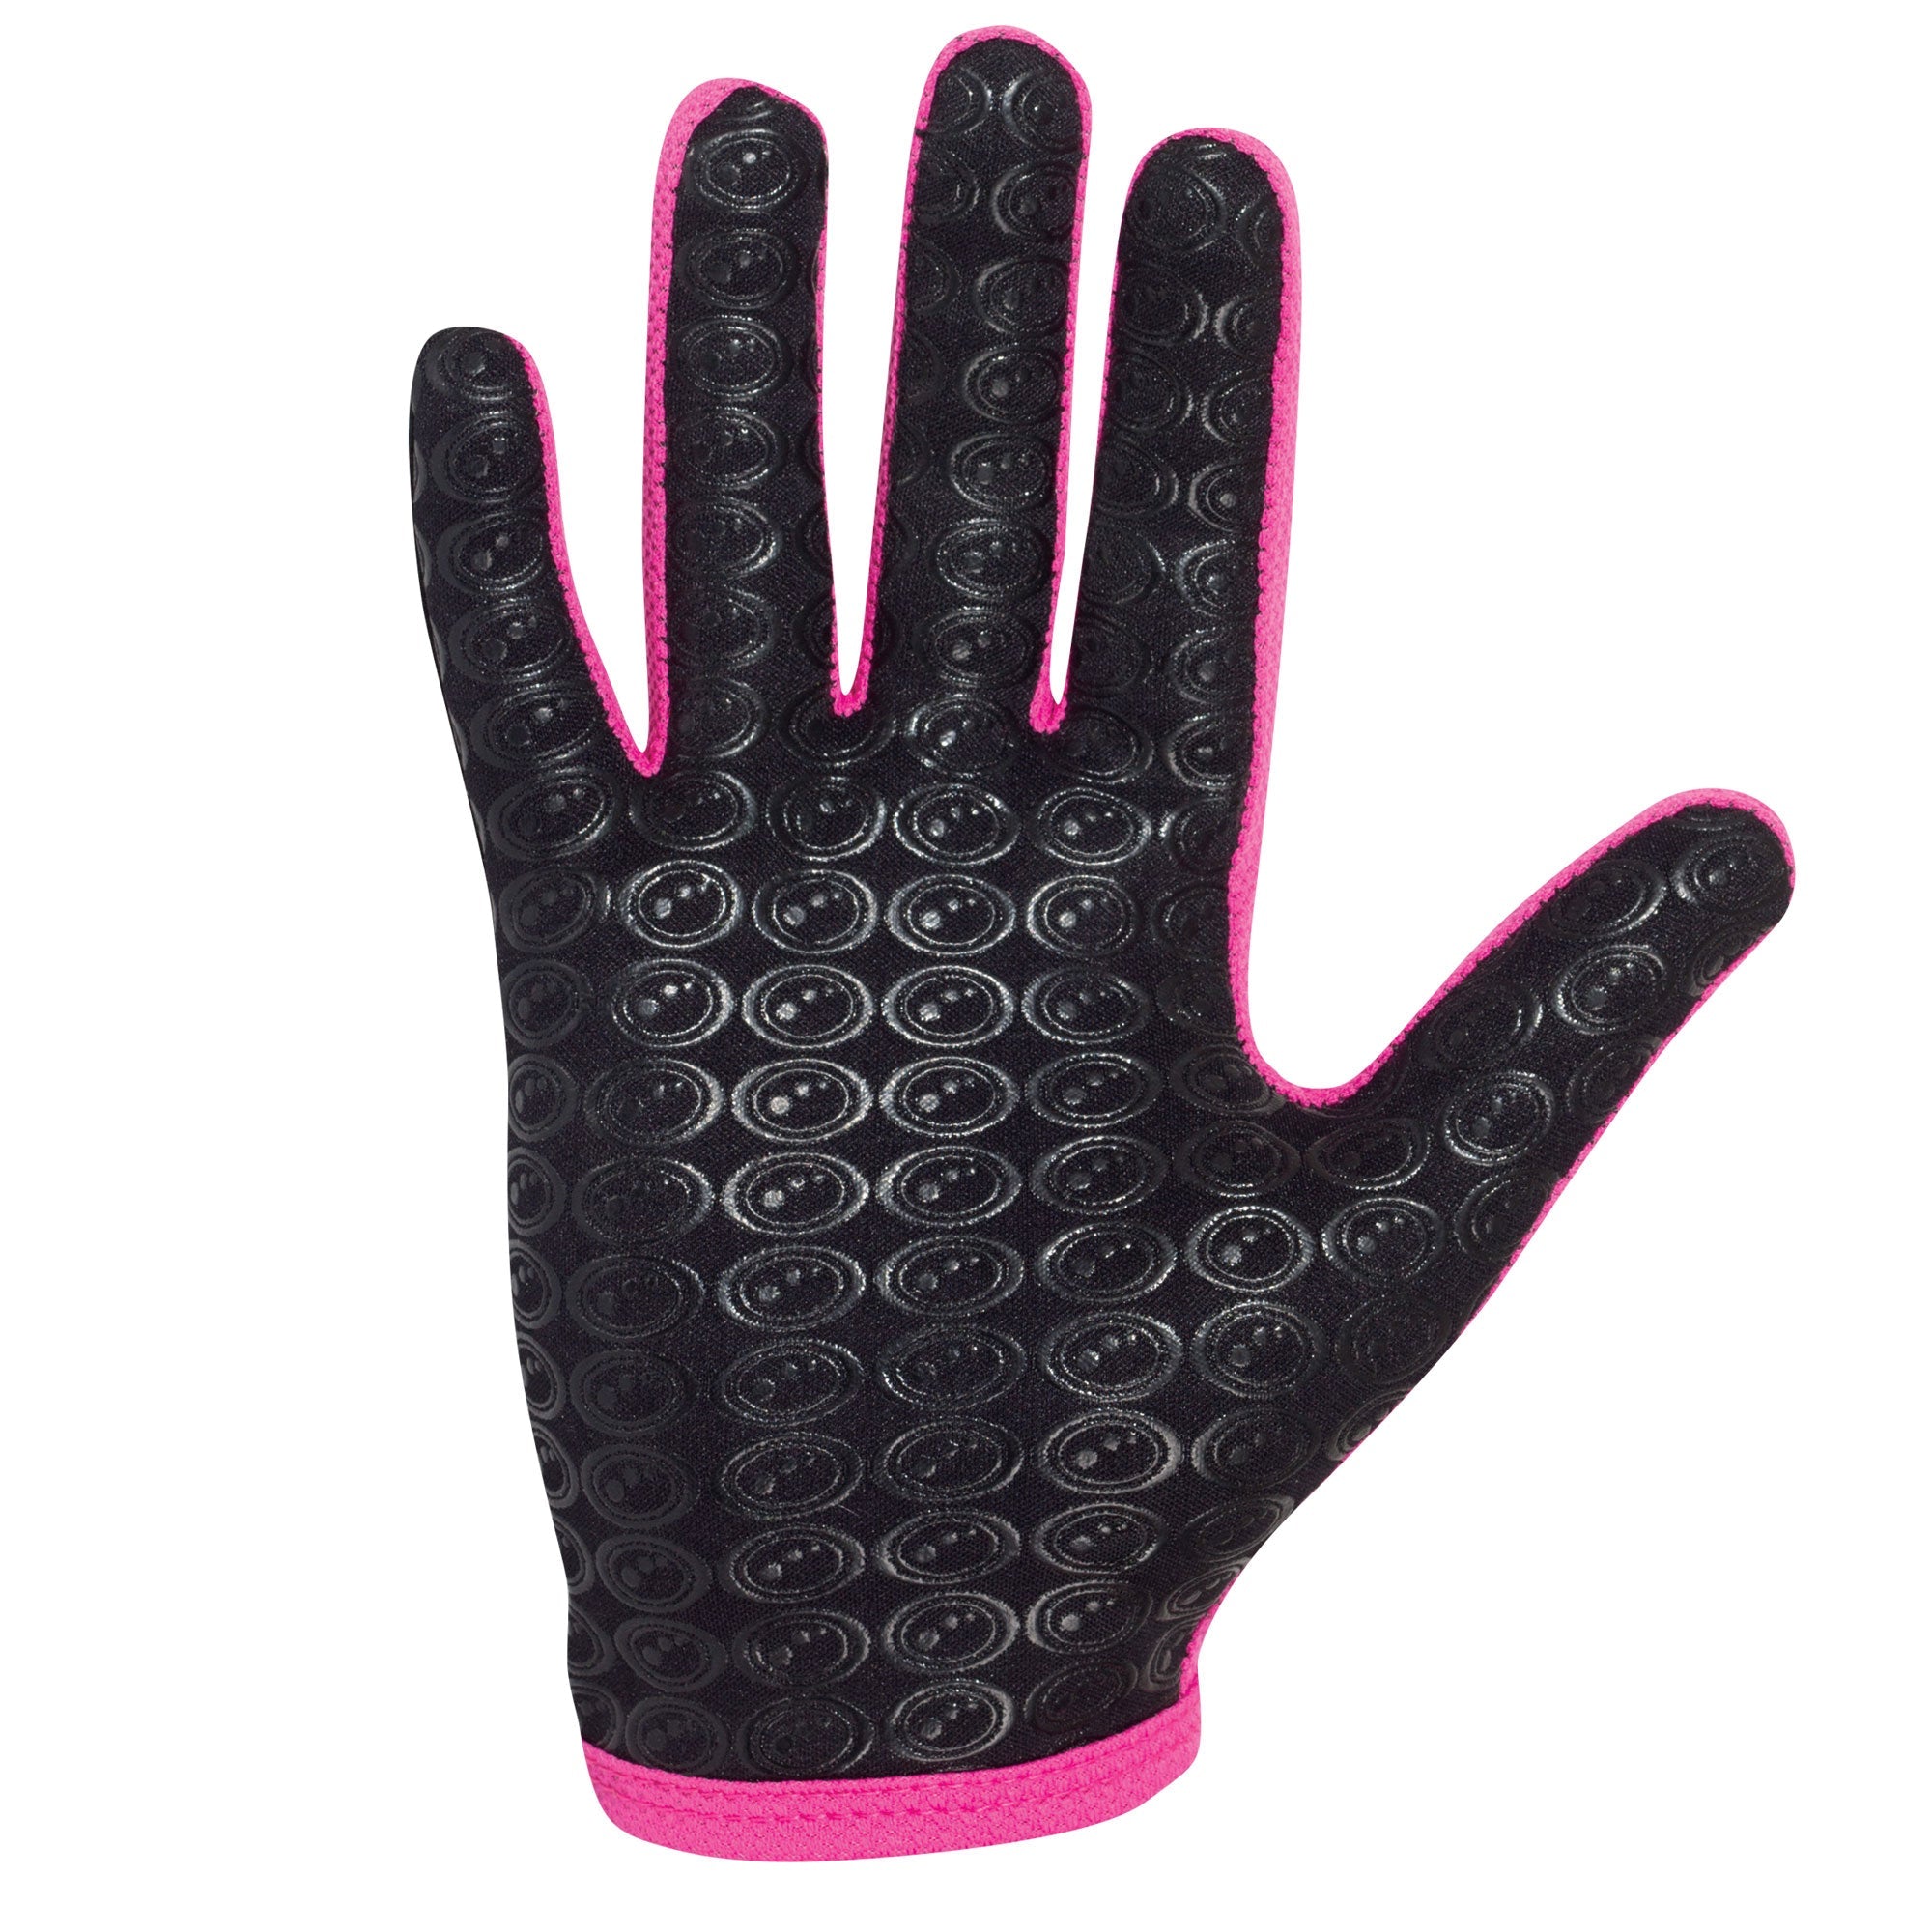 Multi-X Full Finger Glove Pink - Optimum